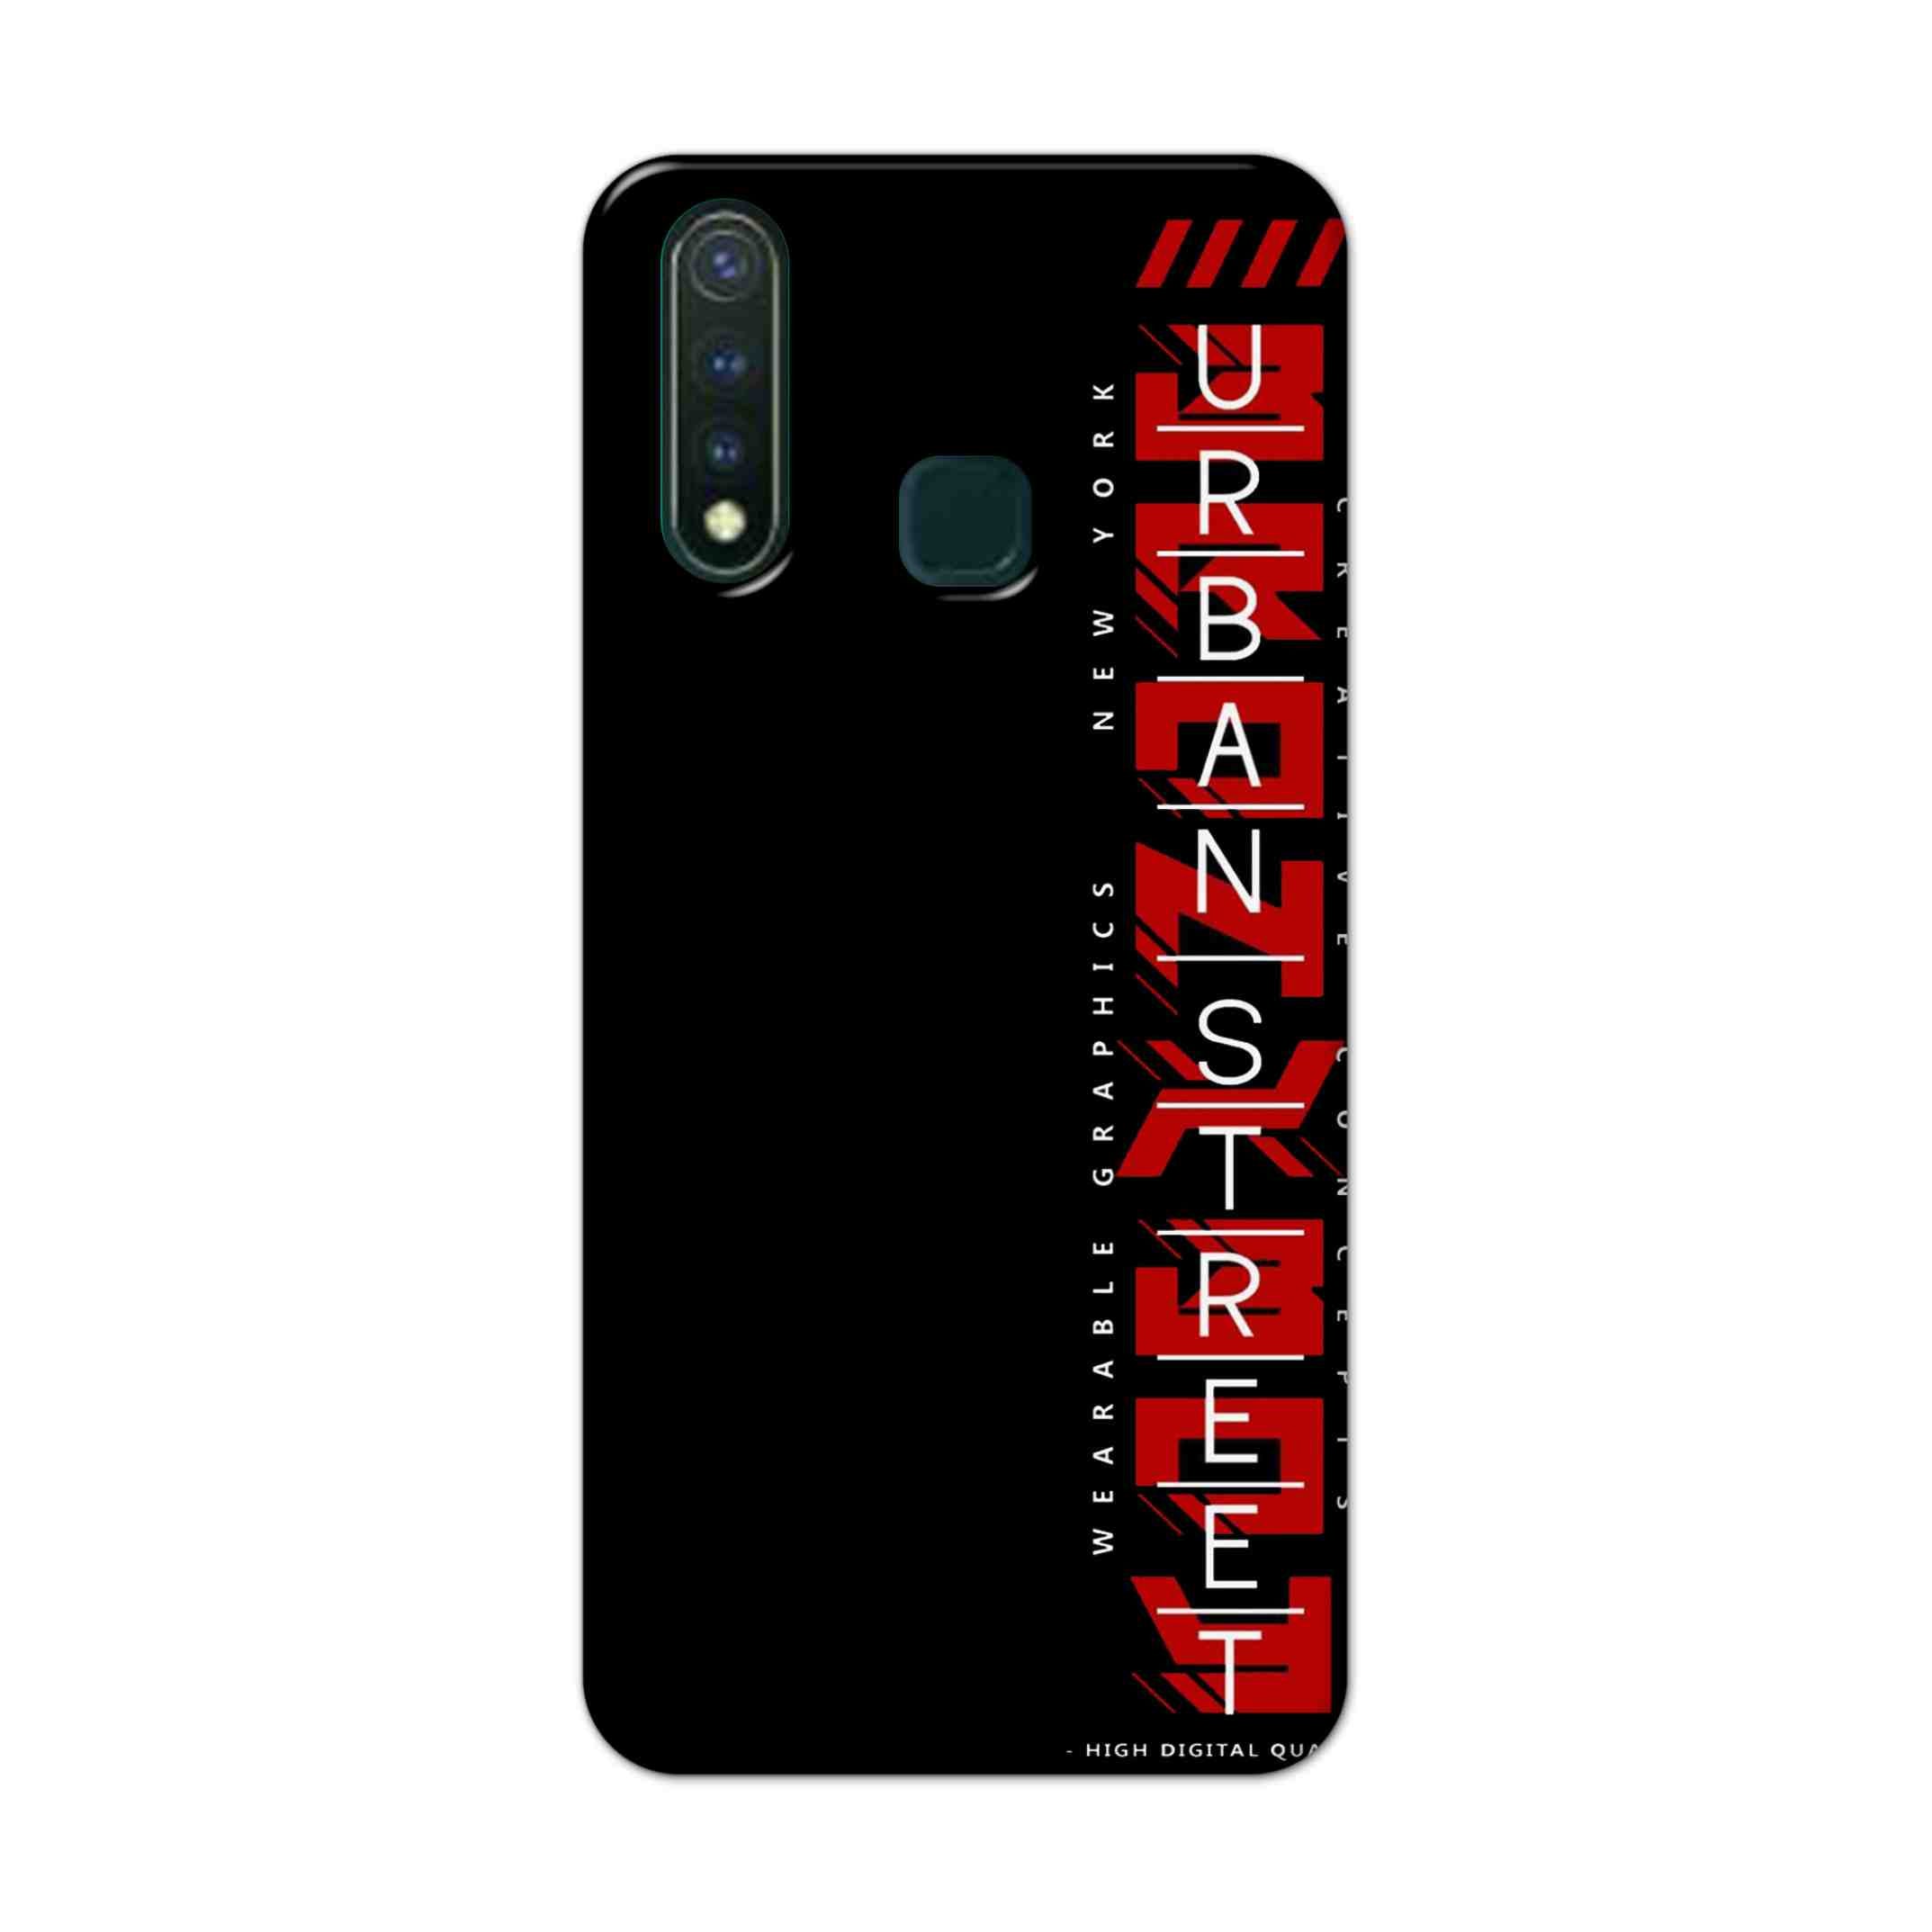 Buy Urban Street Hard Back Mobile Phone Case Cover For Vivo Y19 Online